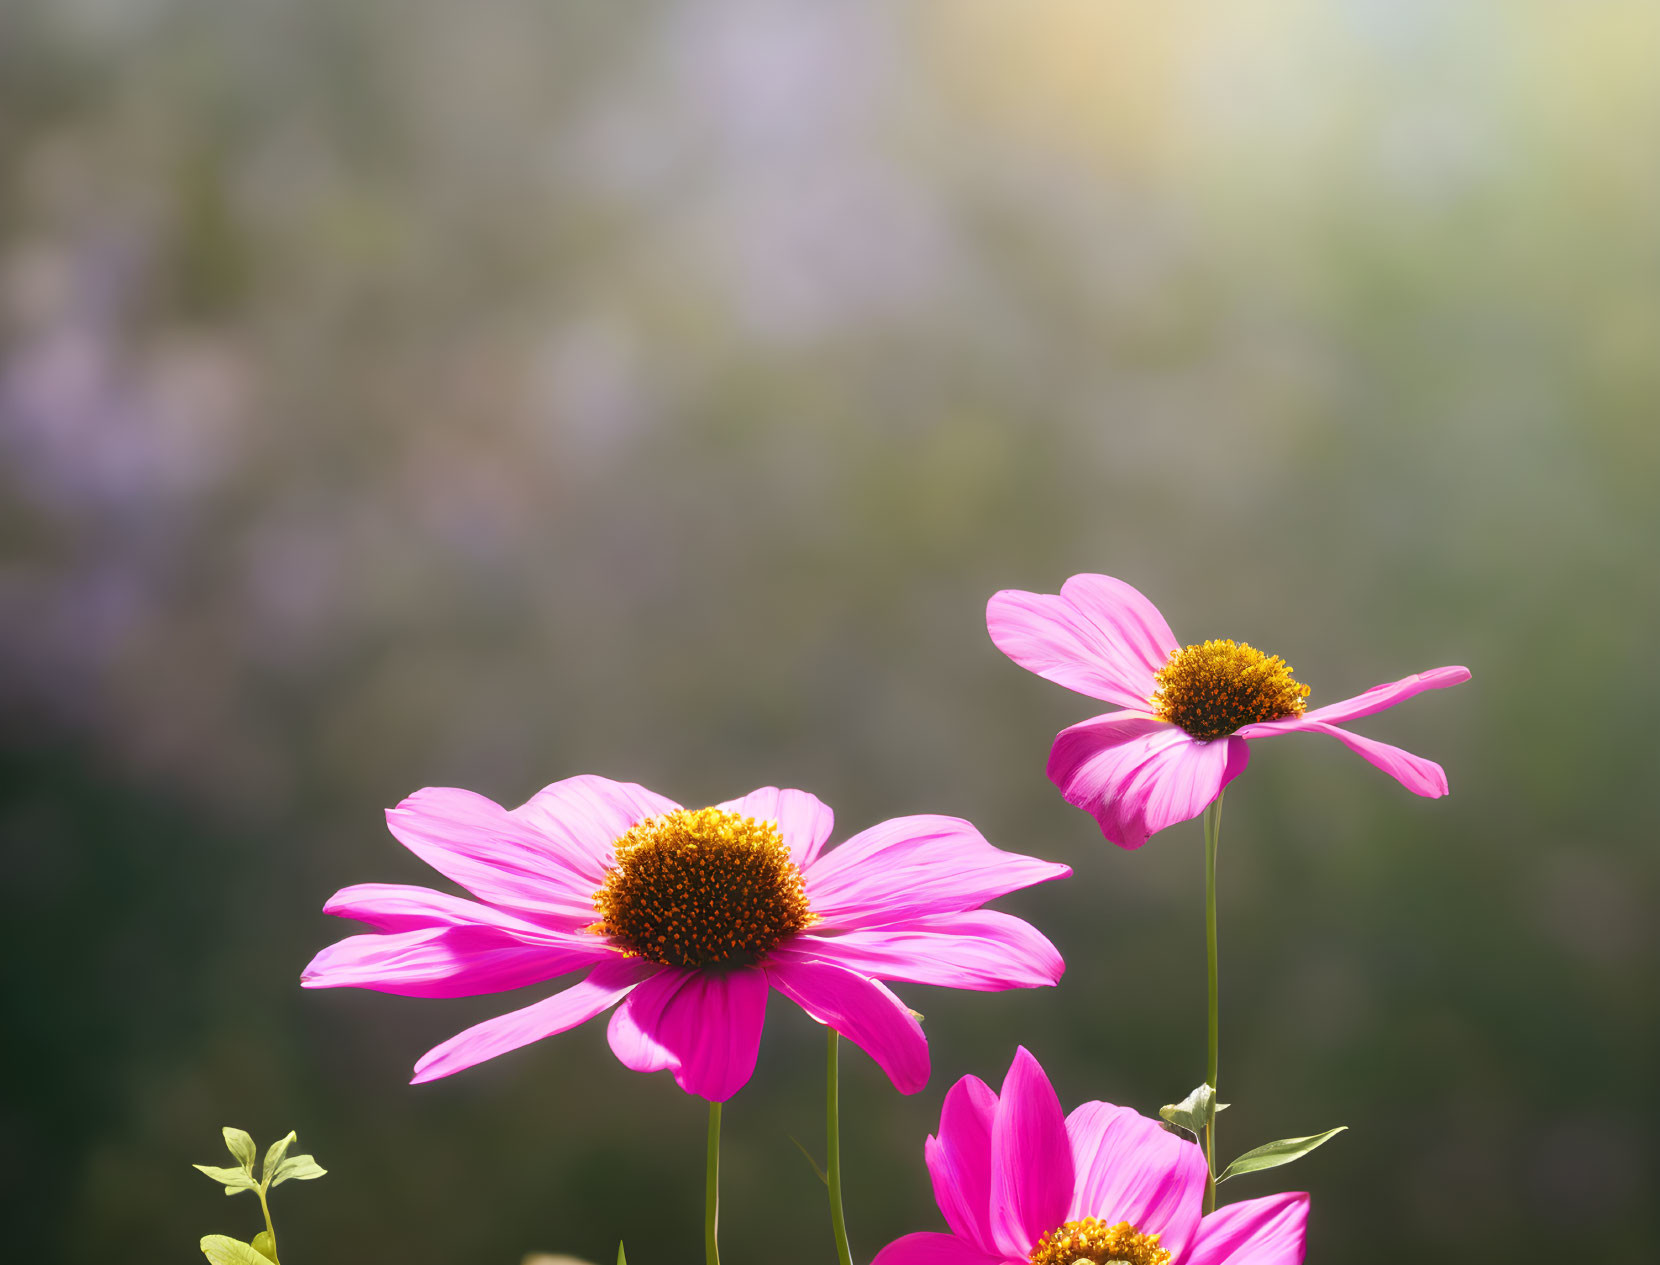 Pink Cosmos Flowers with Golden Centers in Sunlit Garden